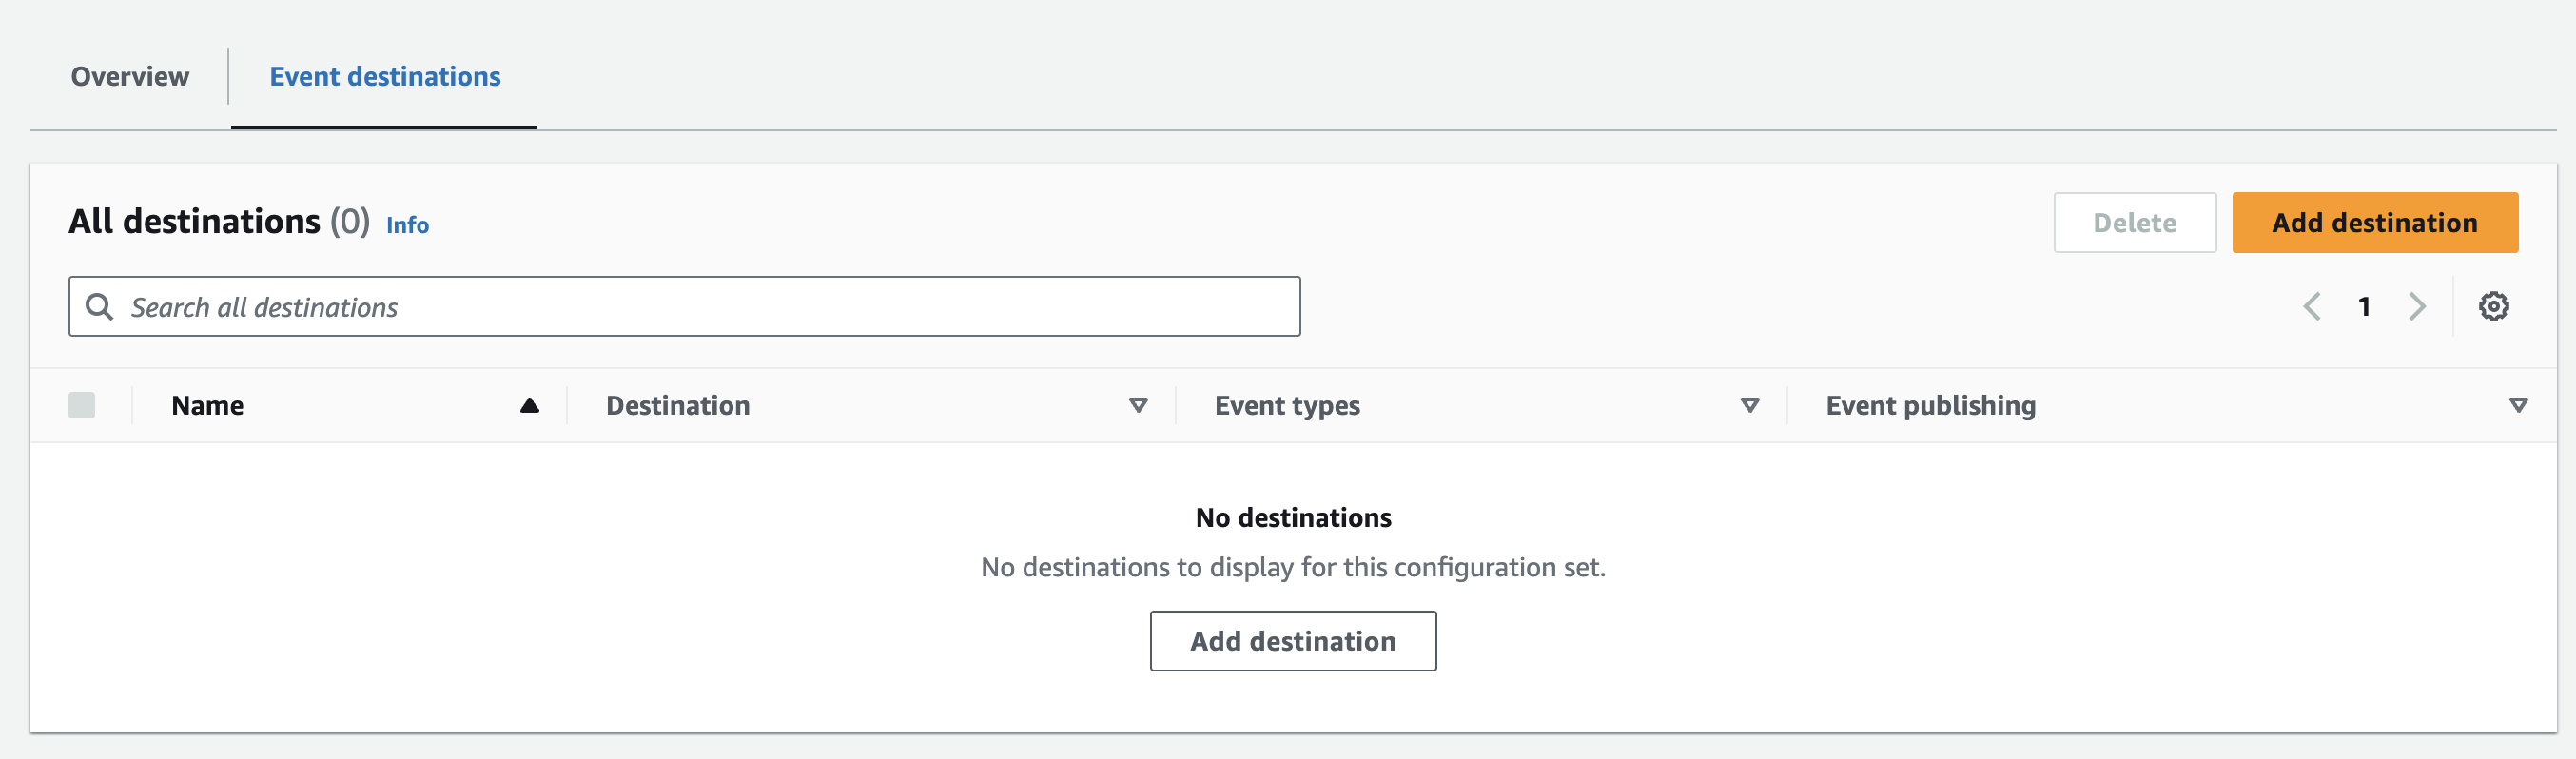 AWS Console view of adding an event destination to the Config set